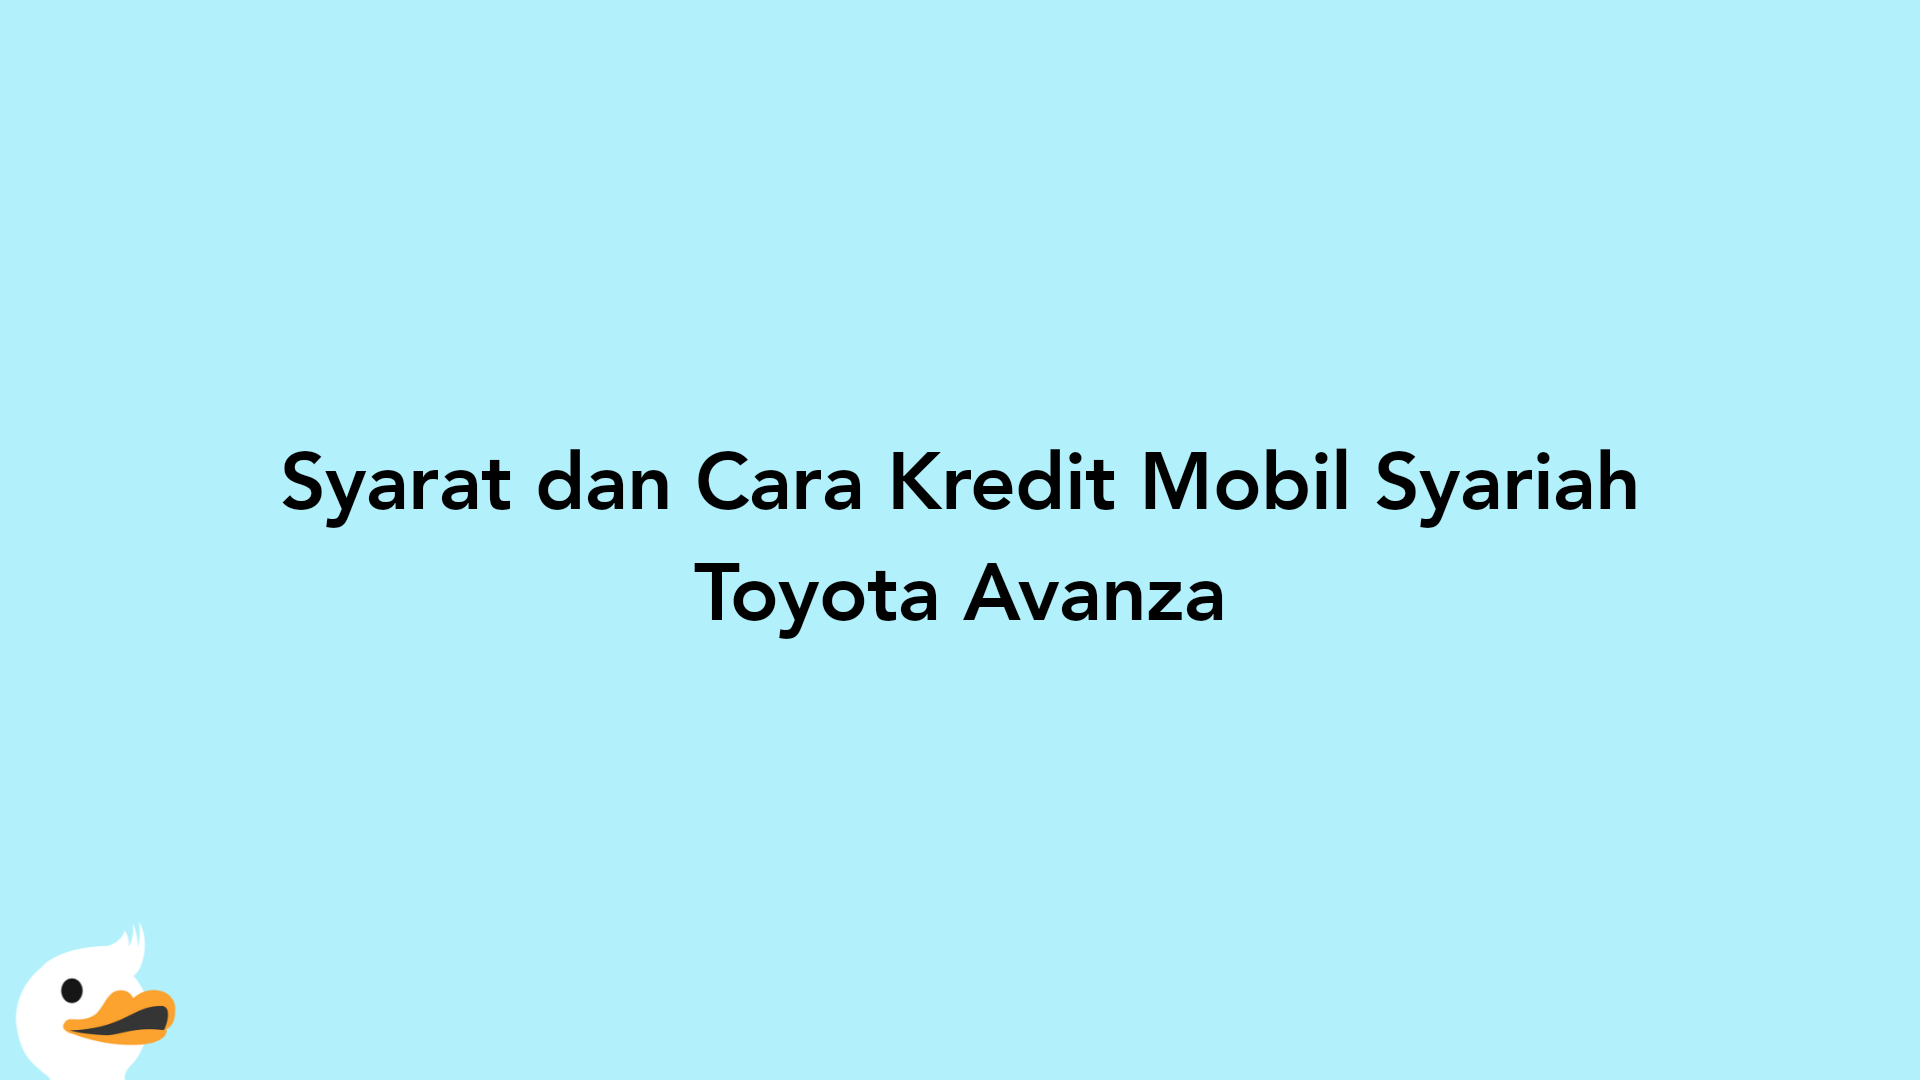 Syarat dan Cara Kredit Mobil Syariah Toyota Avanza